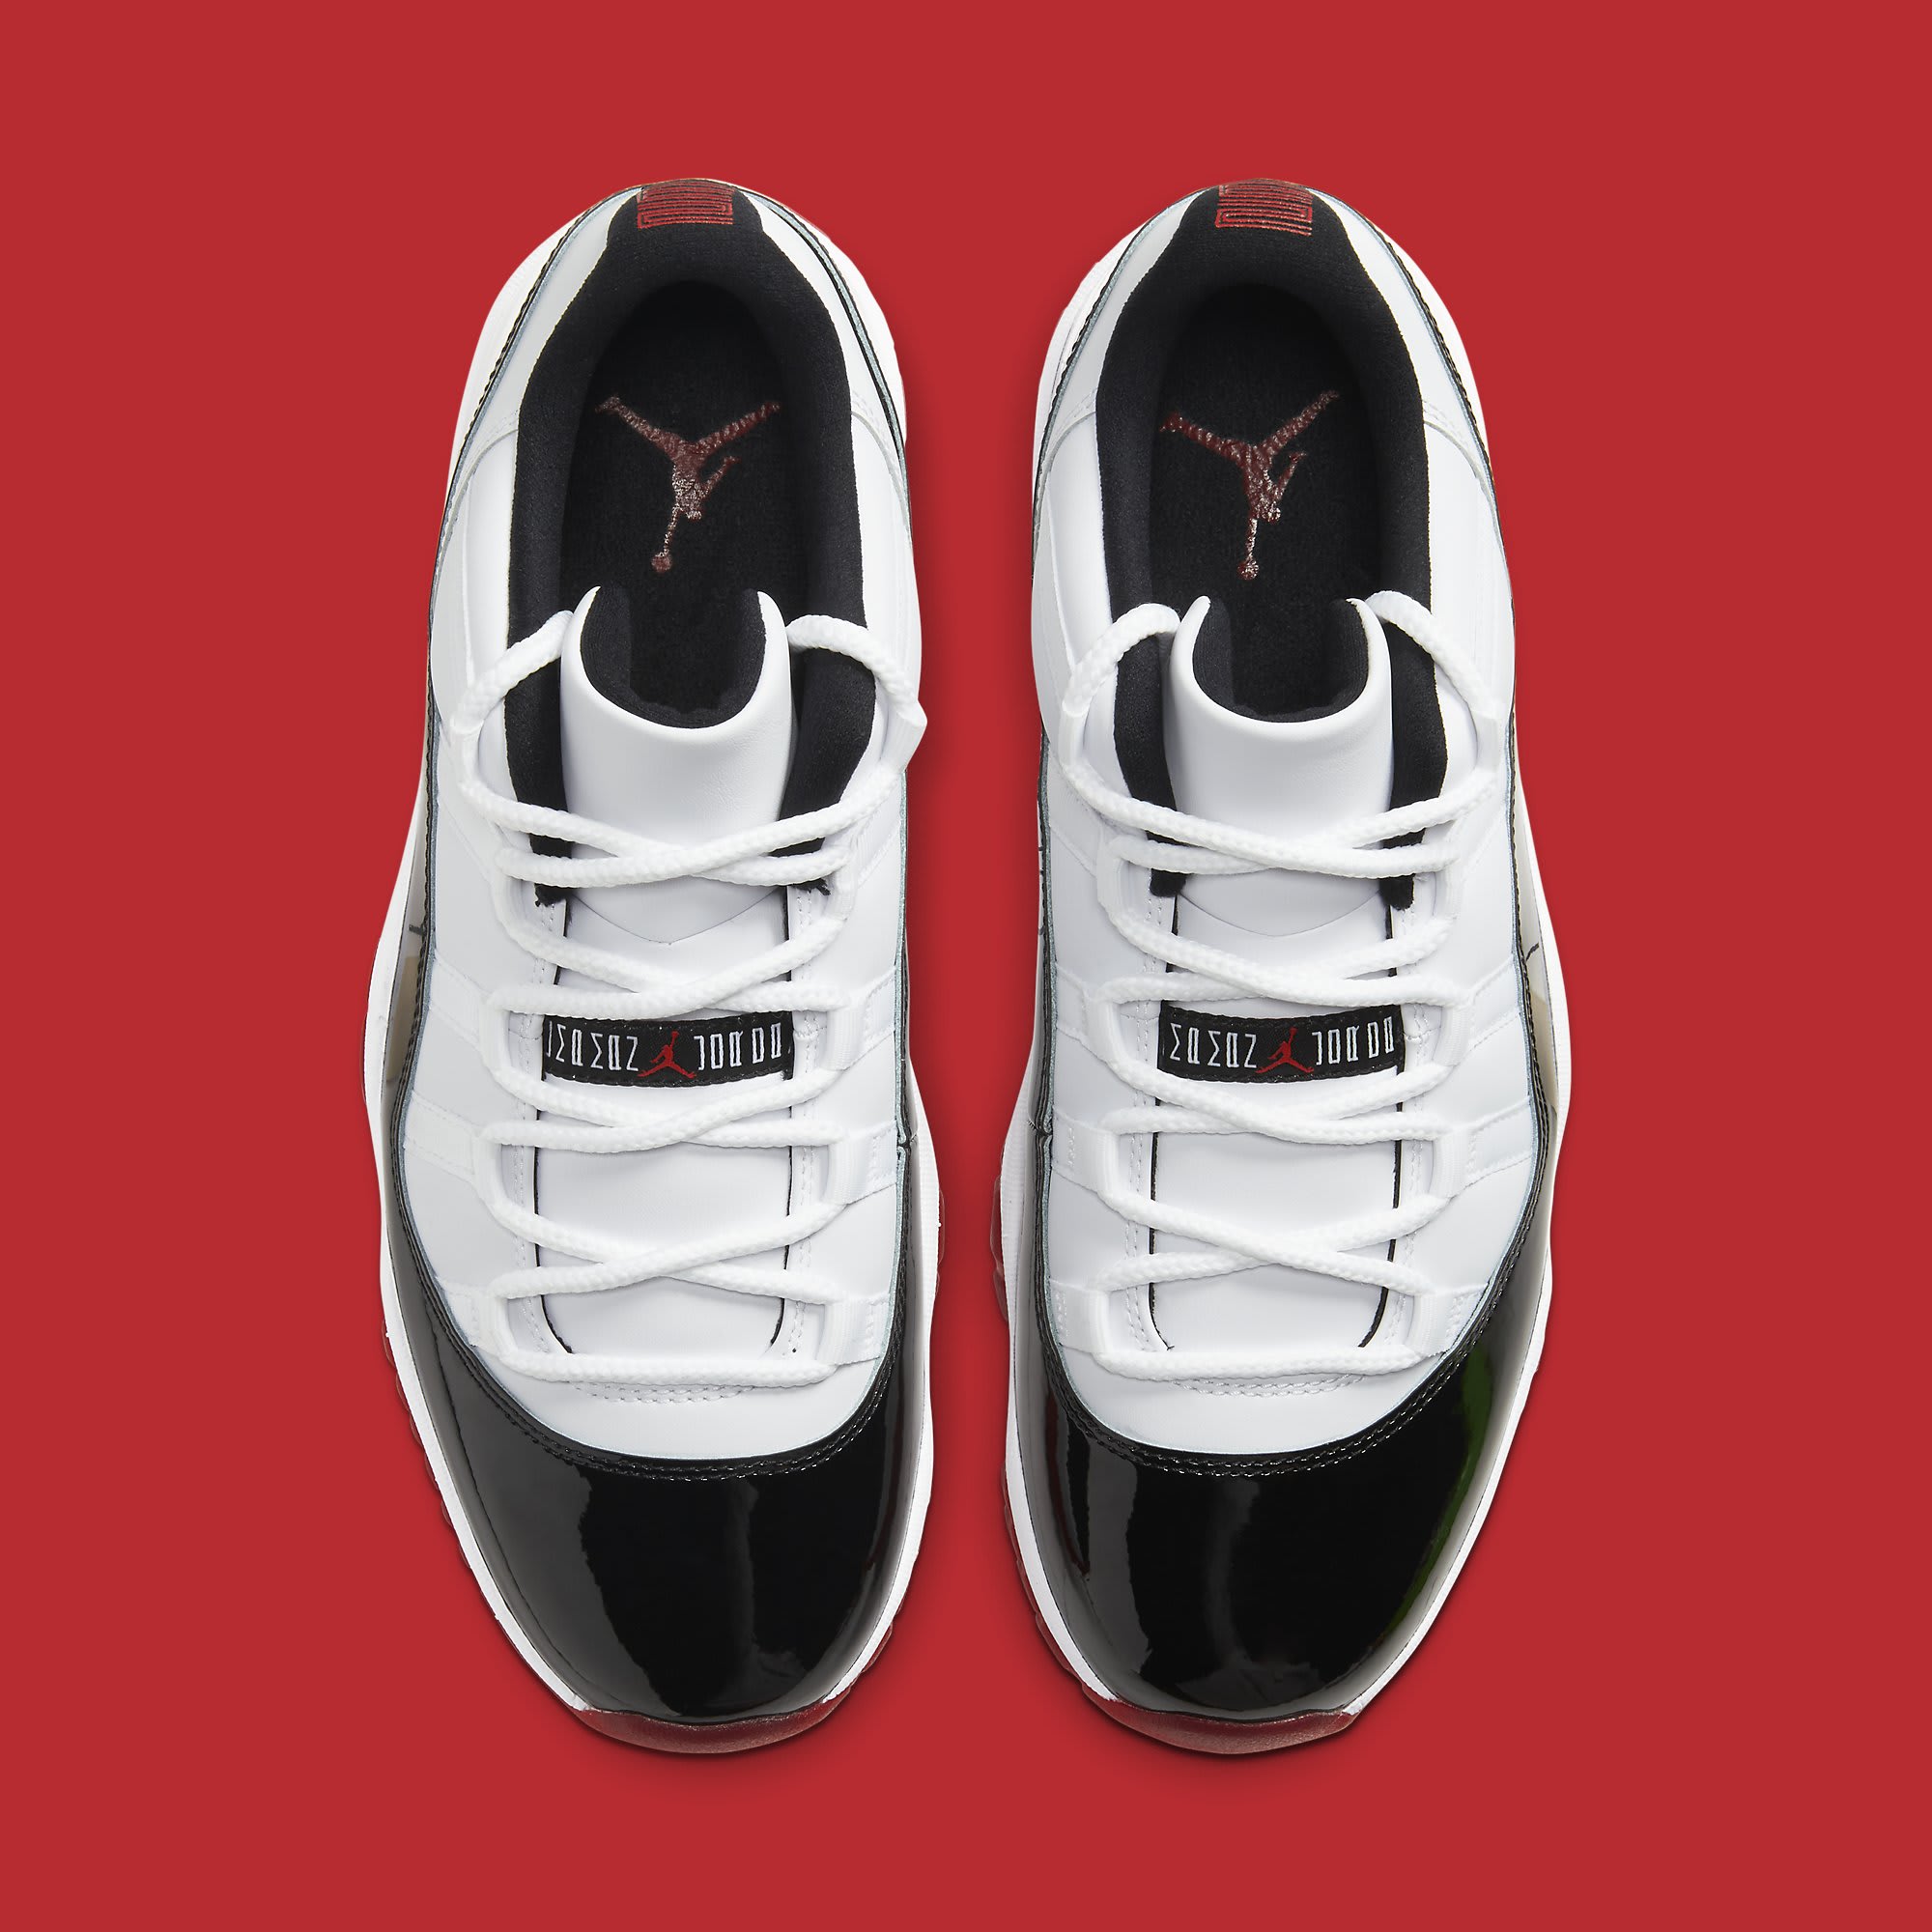 This Air Jordan 11 Low Combines Two OG Colorways